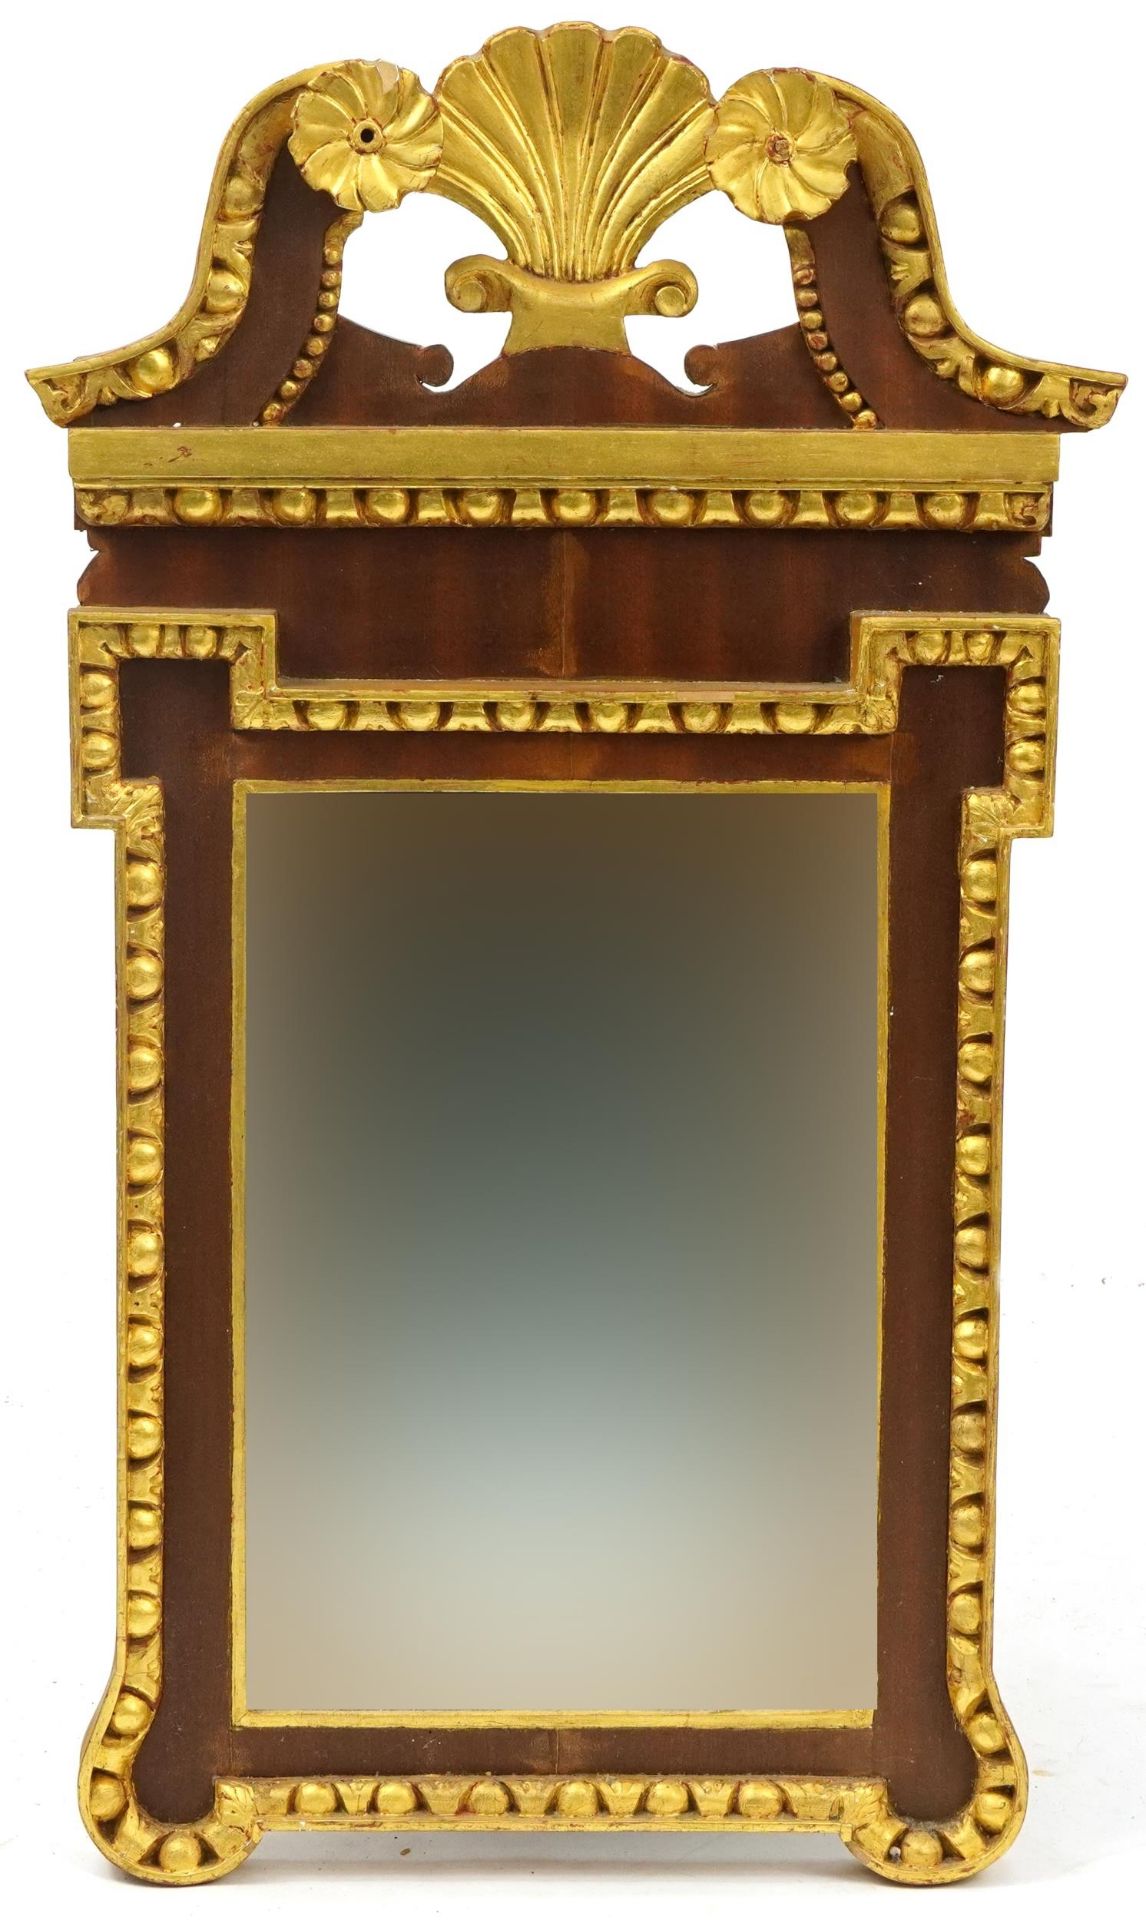 French style rectangular gilt framed pier mirror with shell crest, 86cm x 51cm